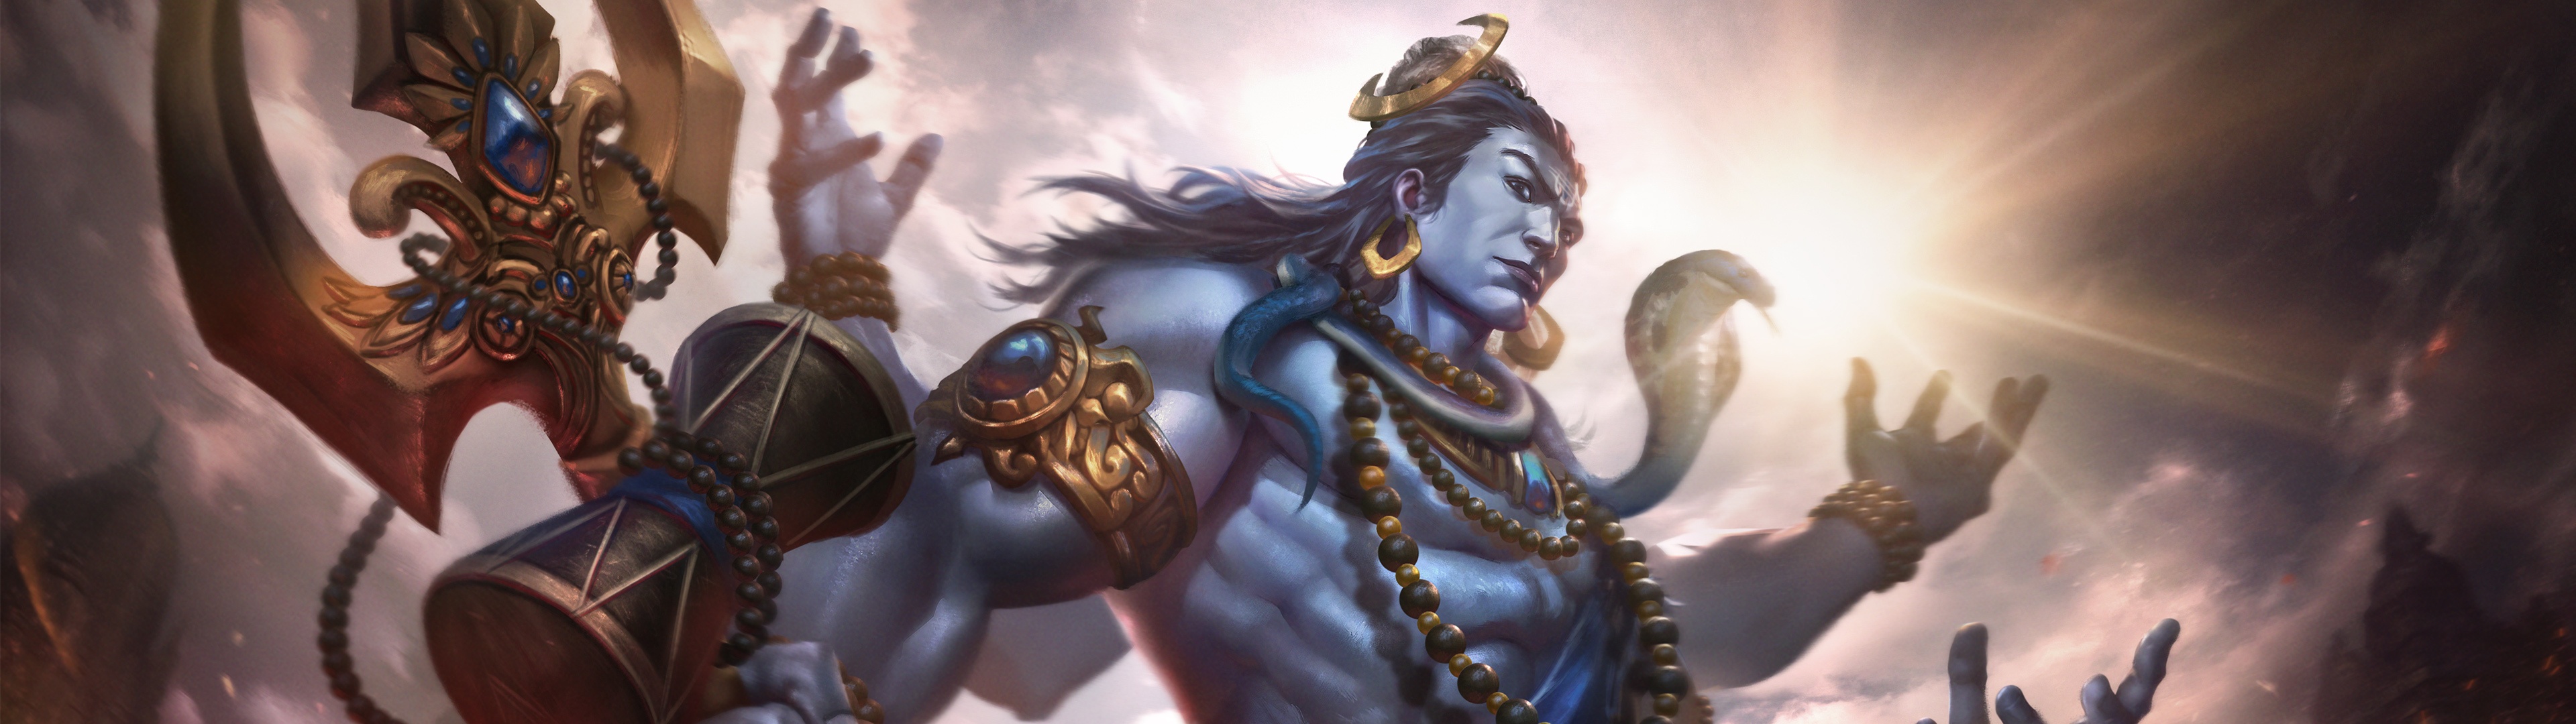 God Ganesh in Smite, Lord Ganesh, Smite 4K wallpaper download